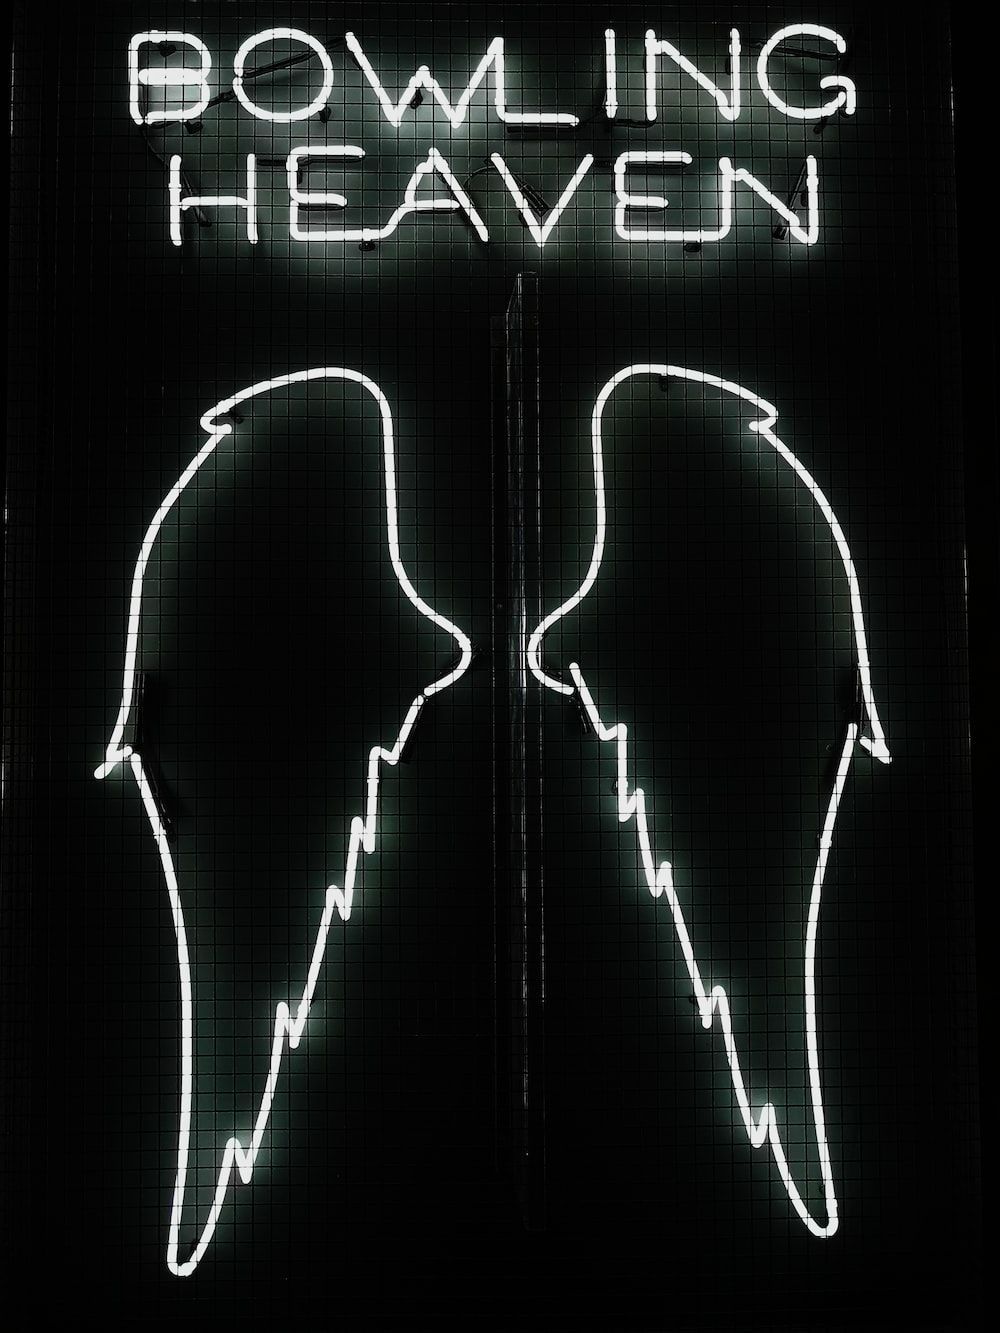 Bowling heaven LED light photo